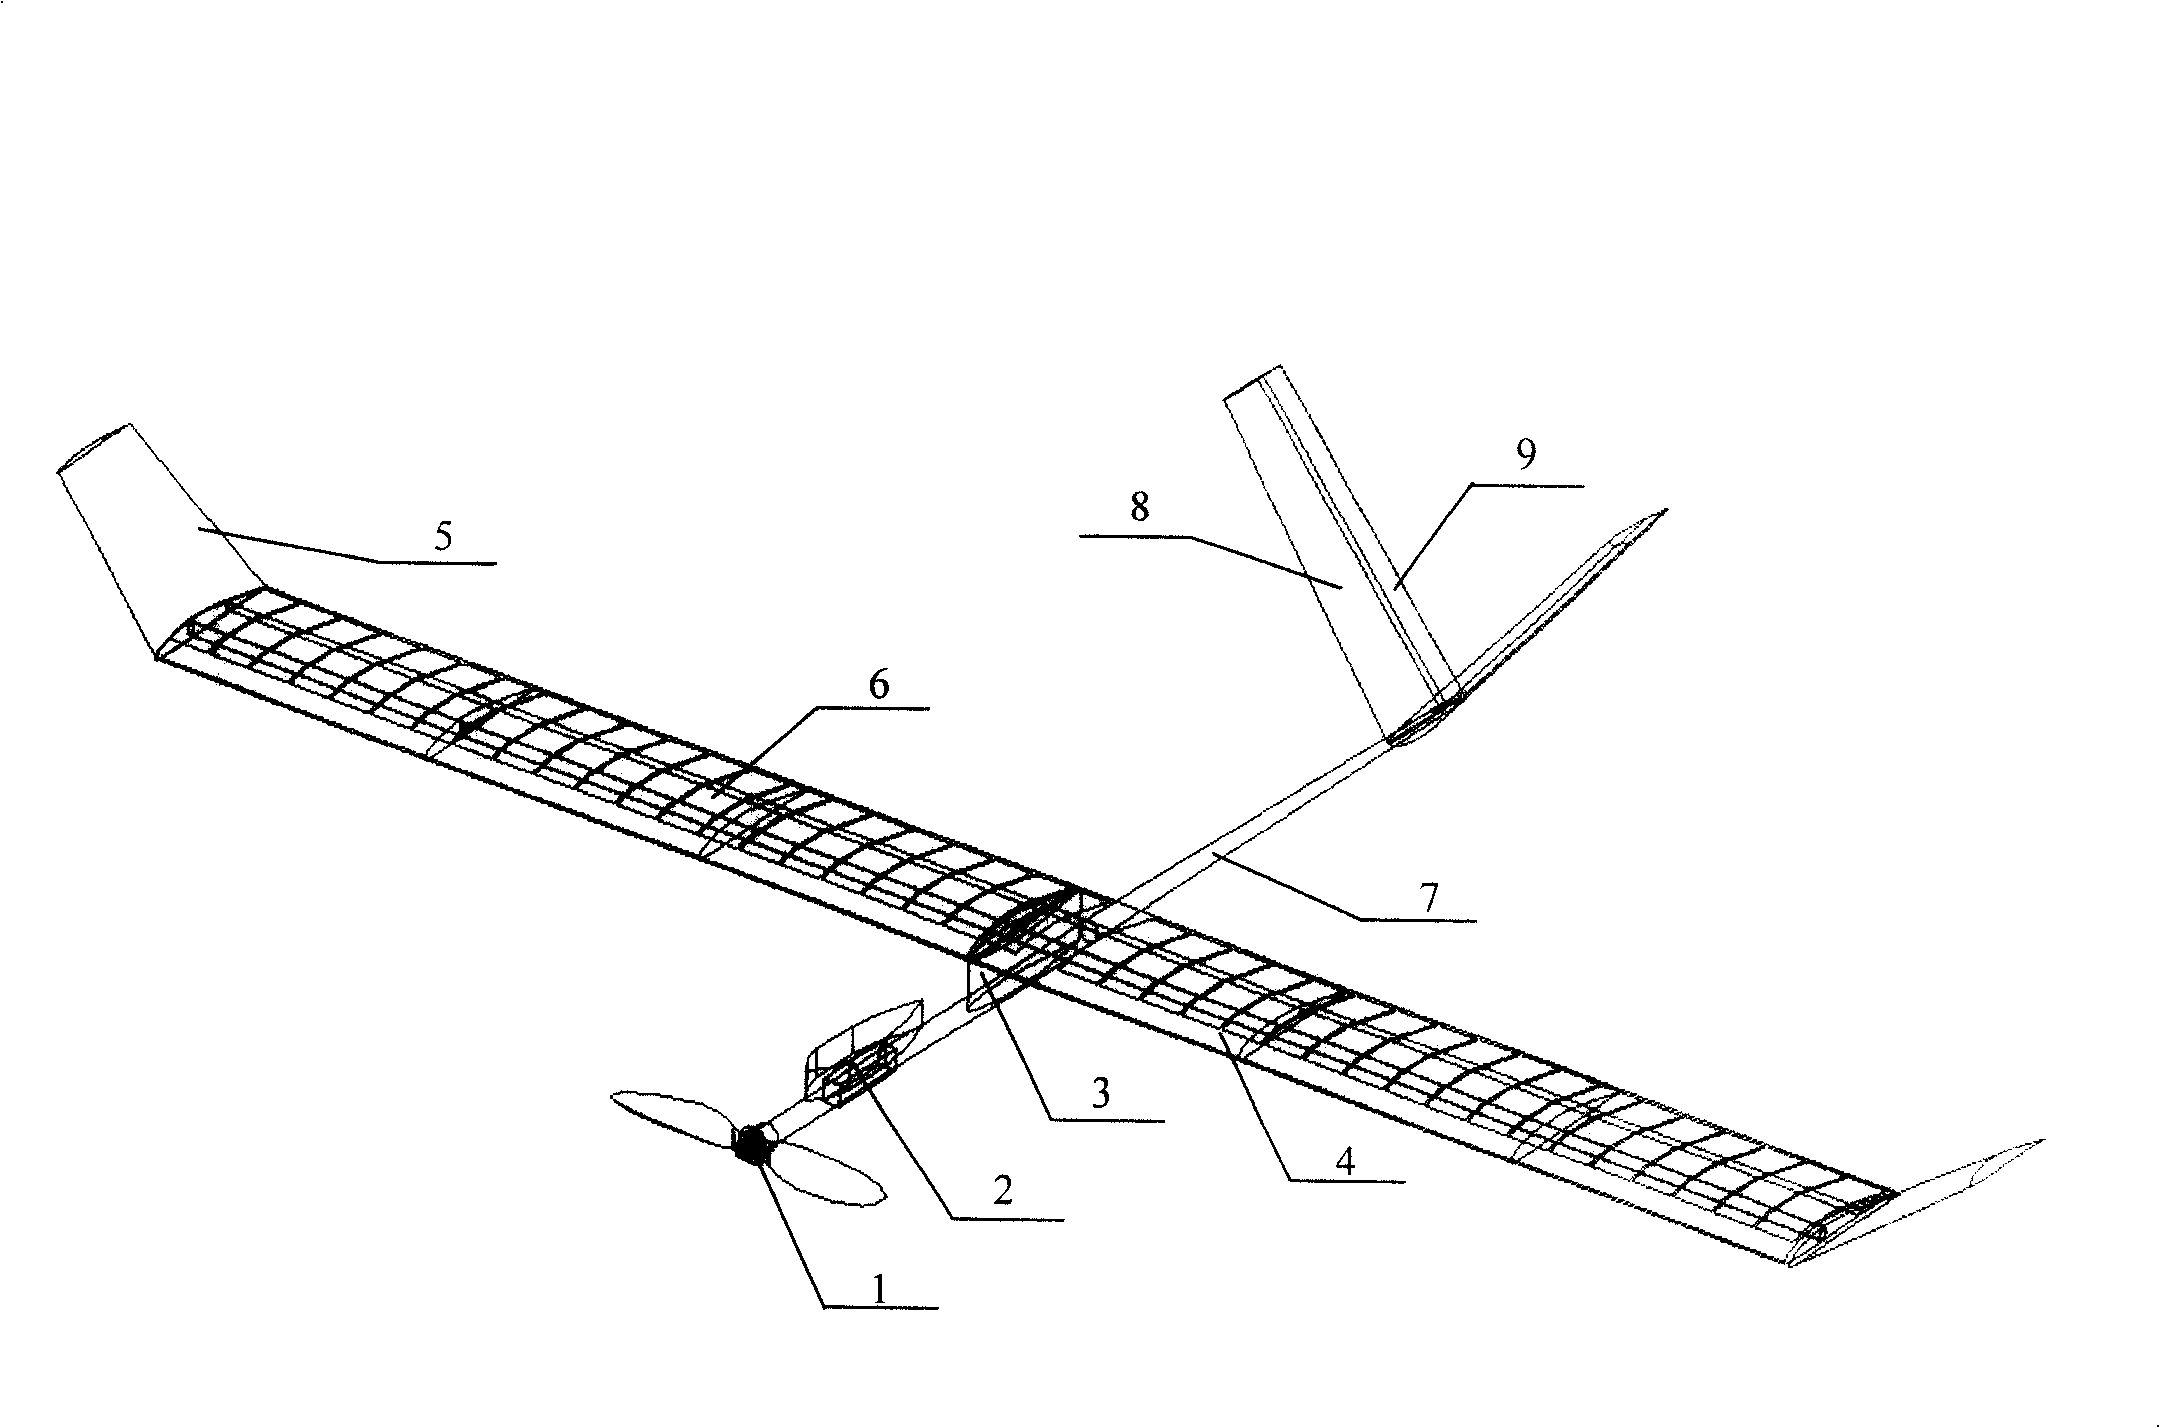 Solar pilotless plane